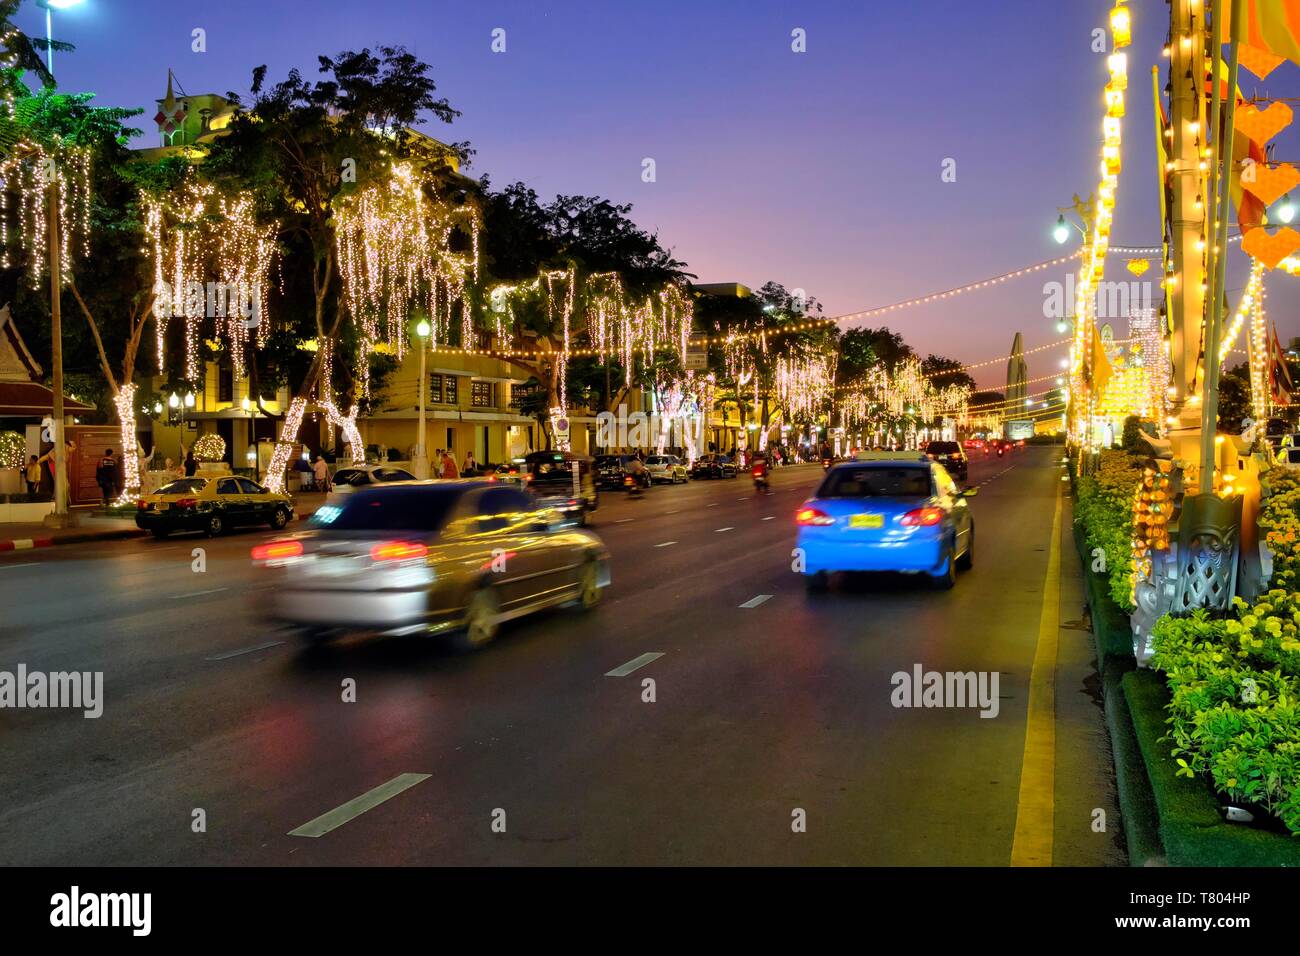 Illuminated street decorated with lights with car traffic at dusk, Rachadamnoen Klang Road, Bangkok, Thailand Stock Photo